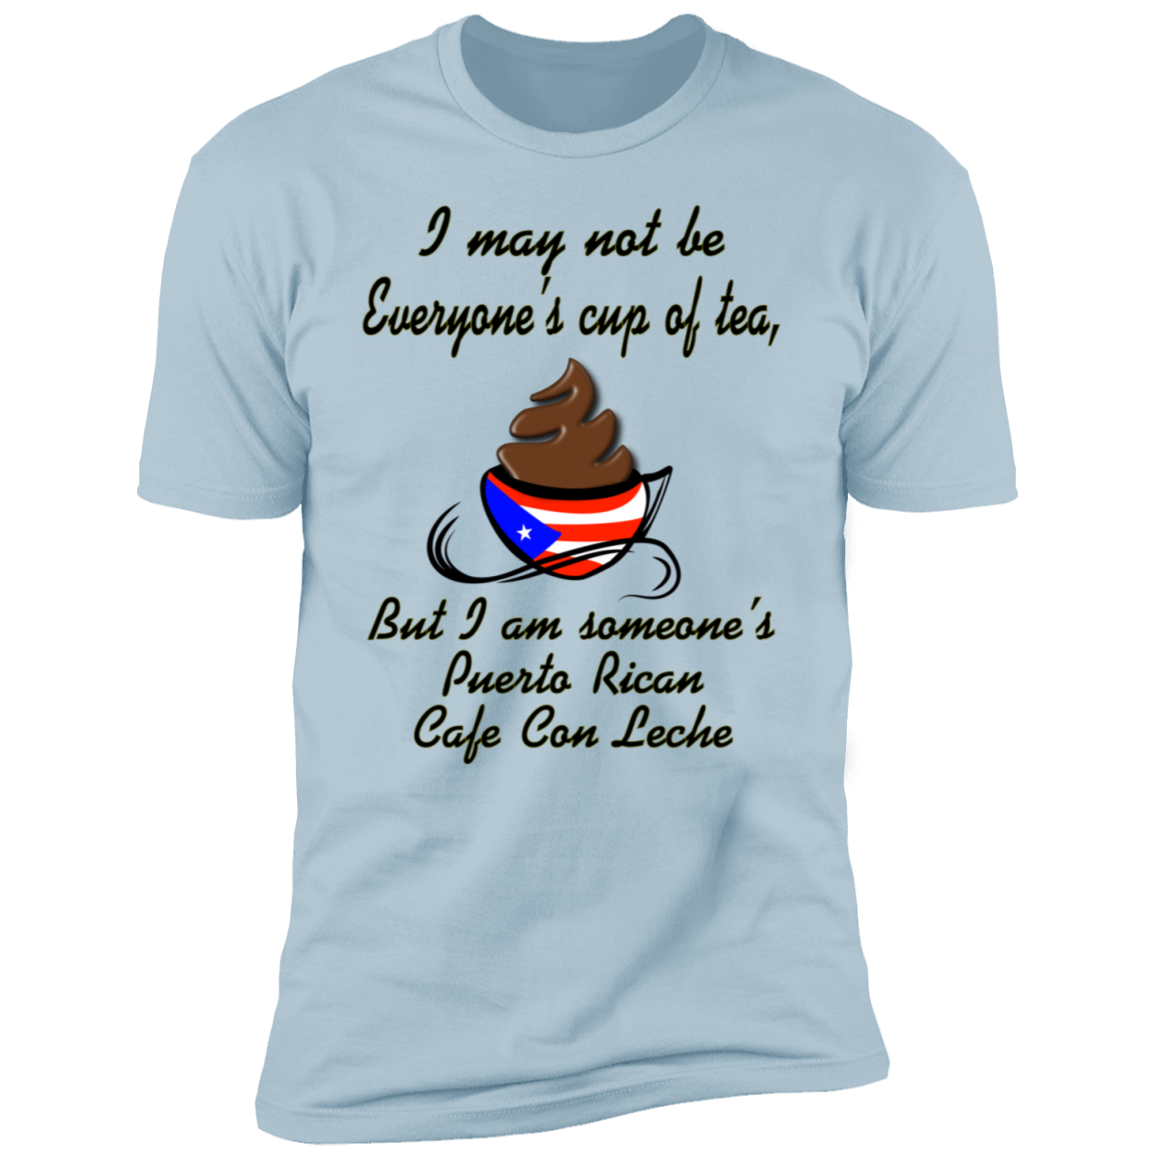 PR Cup of Tea Premium Short Sleeve T-Shirt - Puerto Rican Pride